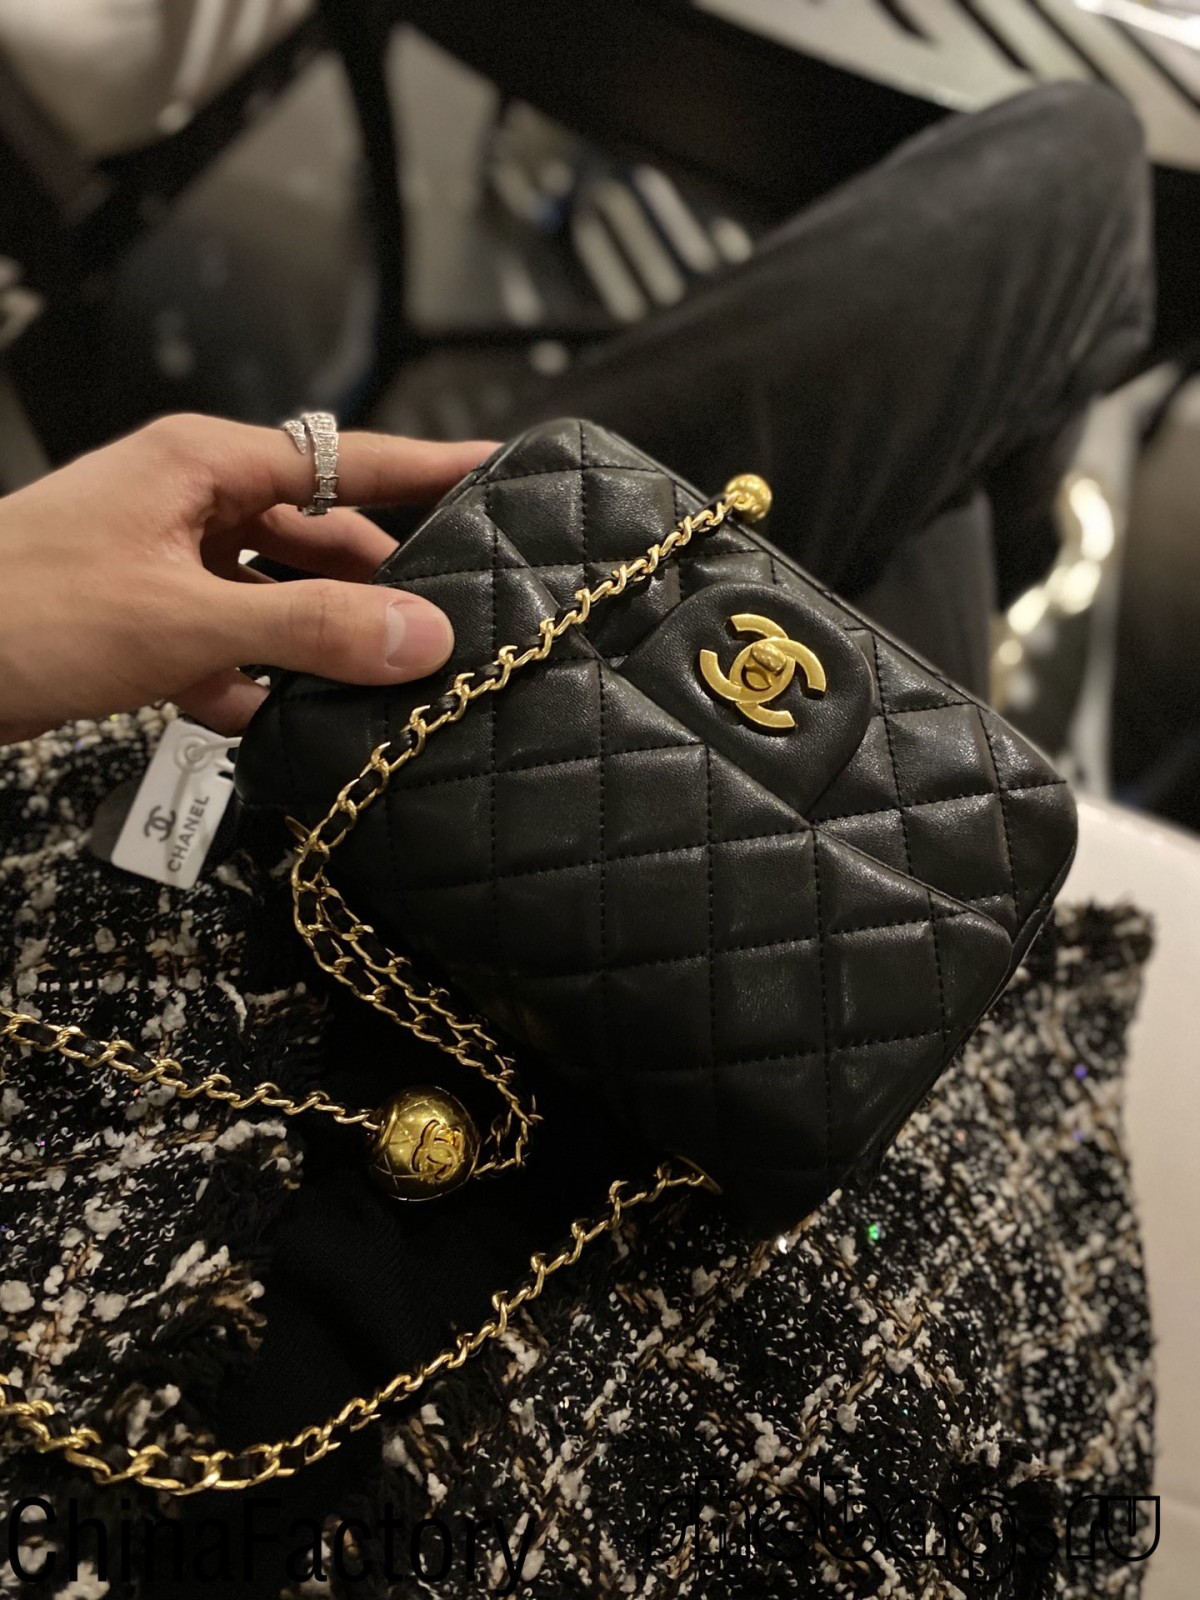 1:1 Chanel պայուսակի կրկնօրինակ. դասական փեղկ կարգավորվող շղթայով (2022թ. ամենաթեժ)-Լավագույն որակի կեղծ Louis Vuitton պայուսակների առցանց խանութ, դիզայներական պայուսակի կրկնօրինակ ru